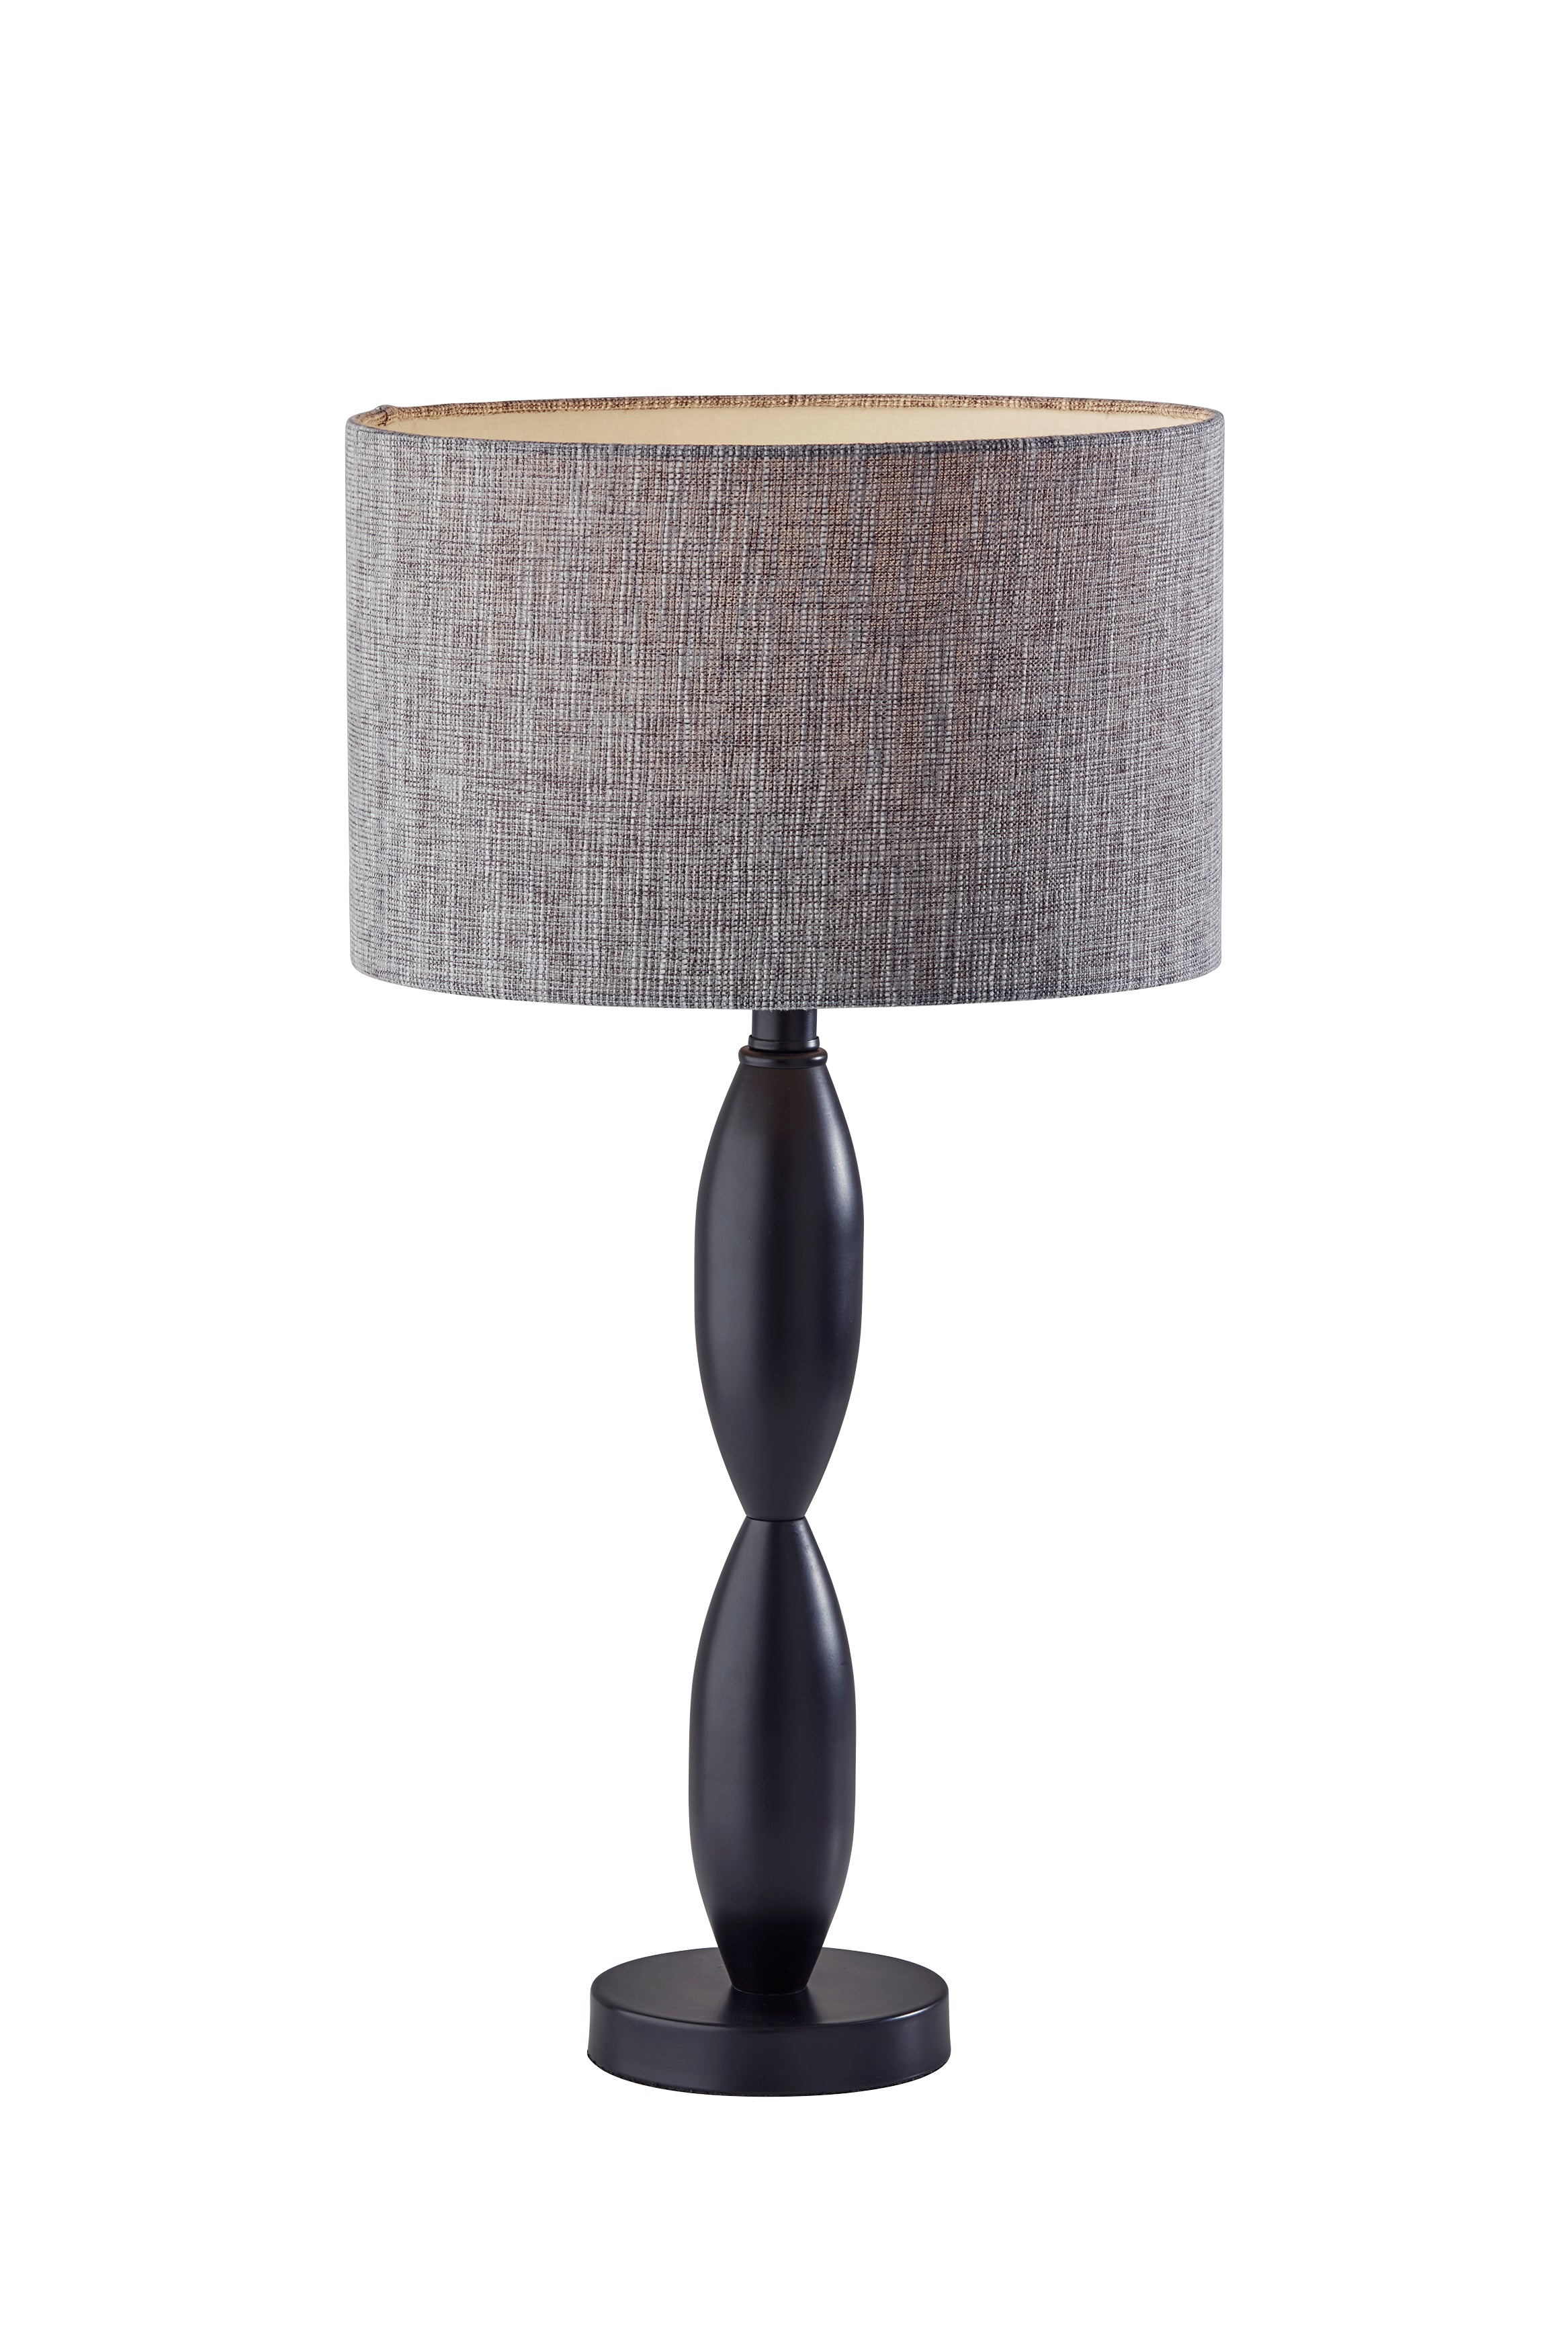 LANCE Table lamp Black - 1602-01 | ADESSO